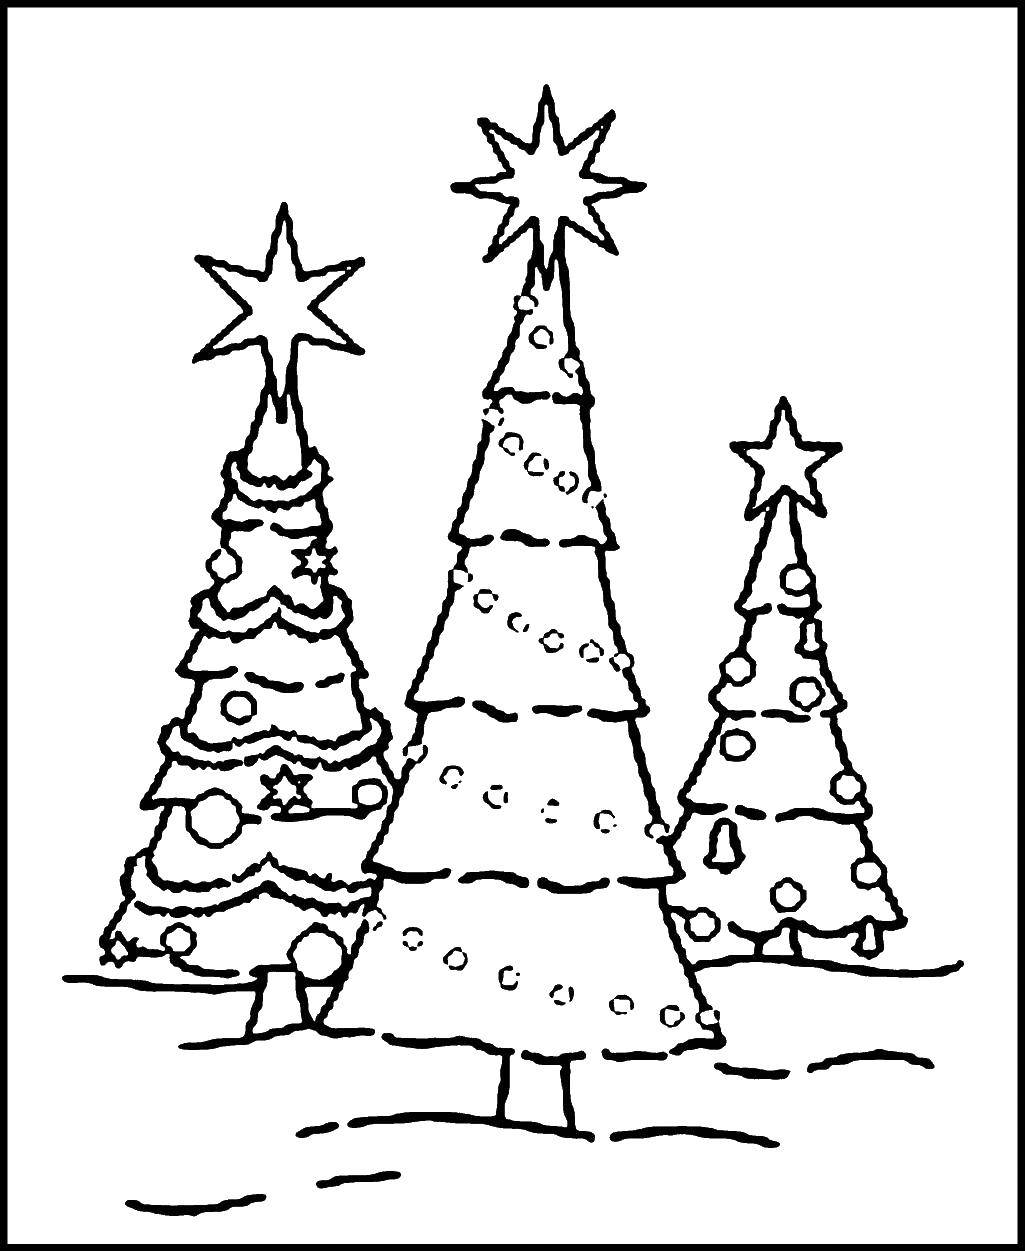 Coloring Tree. Category Christmas. Tags:  Christmas, fir.